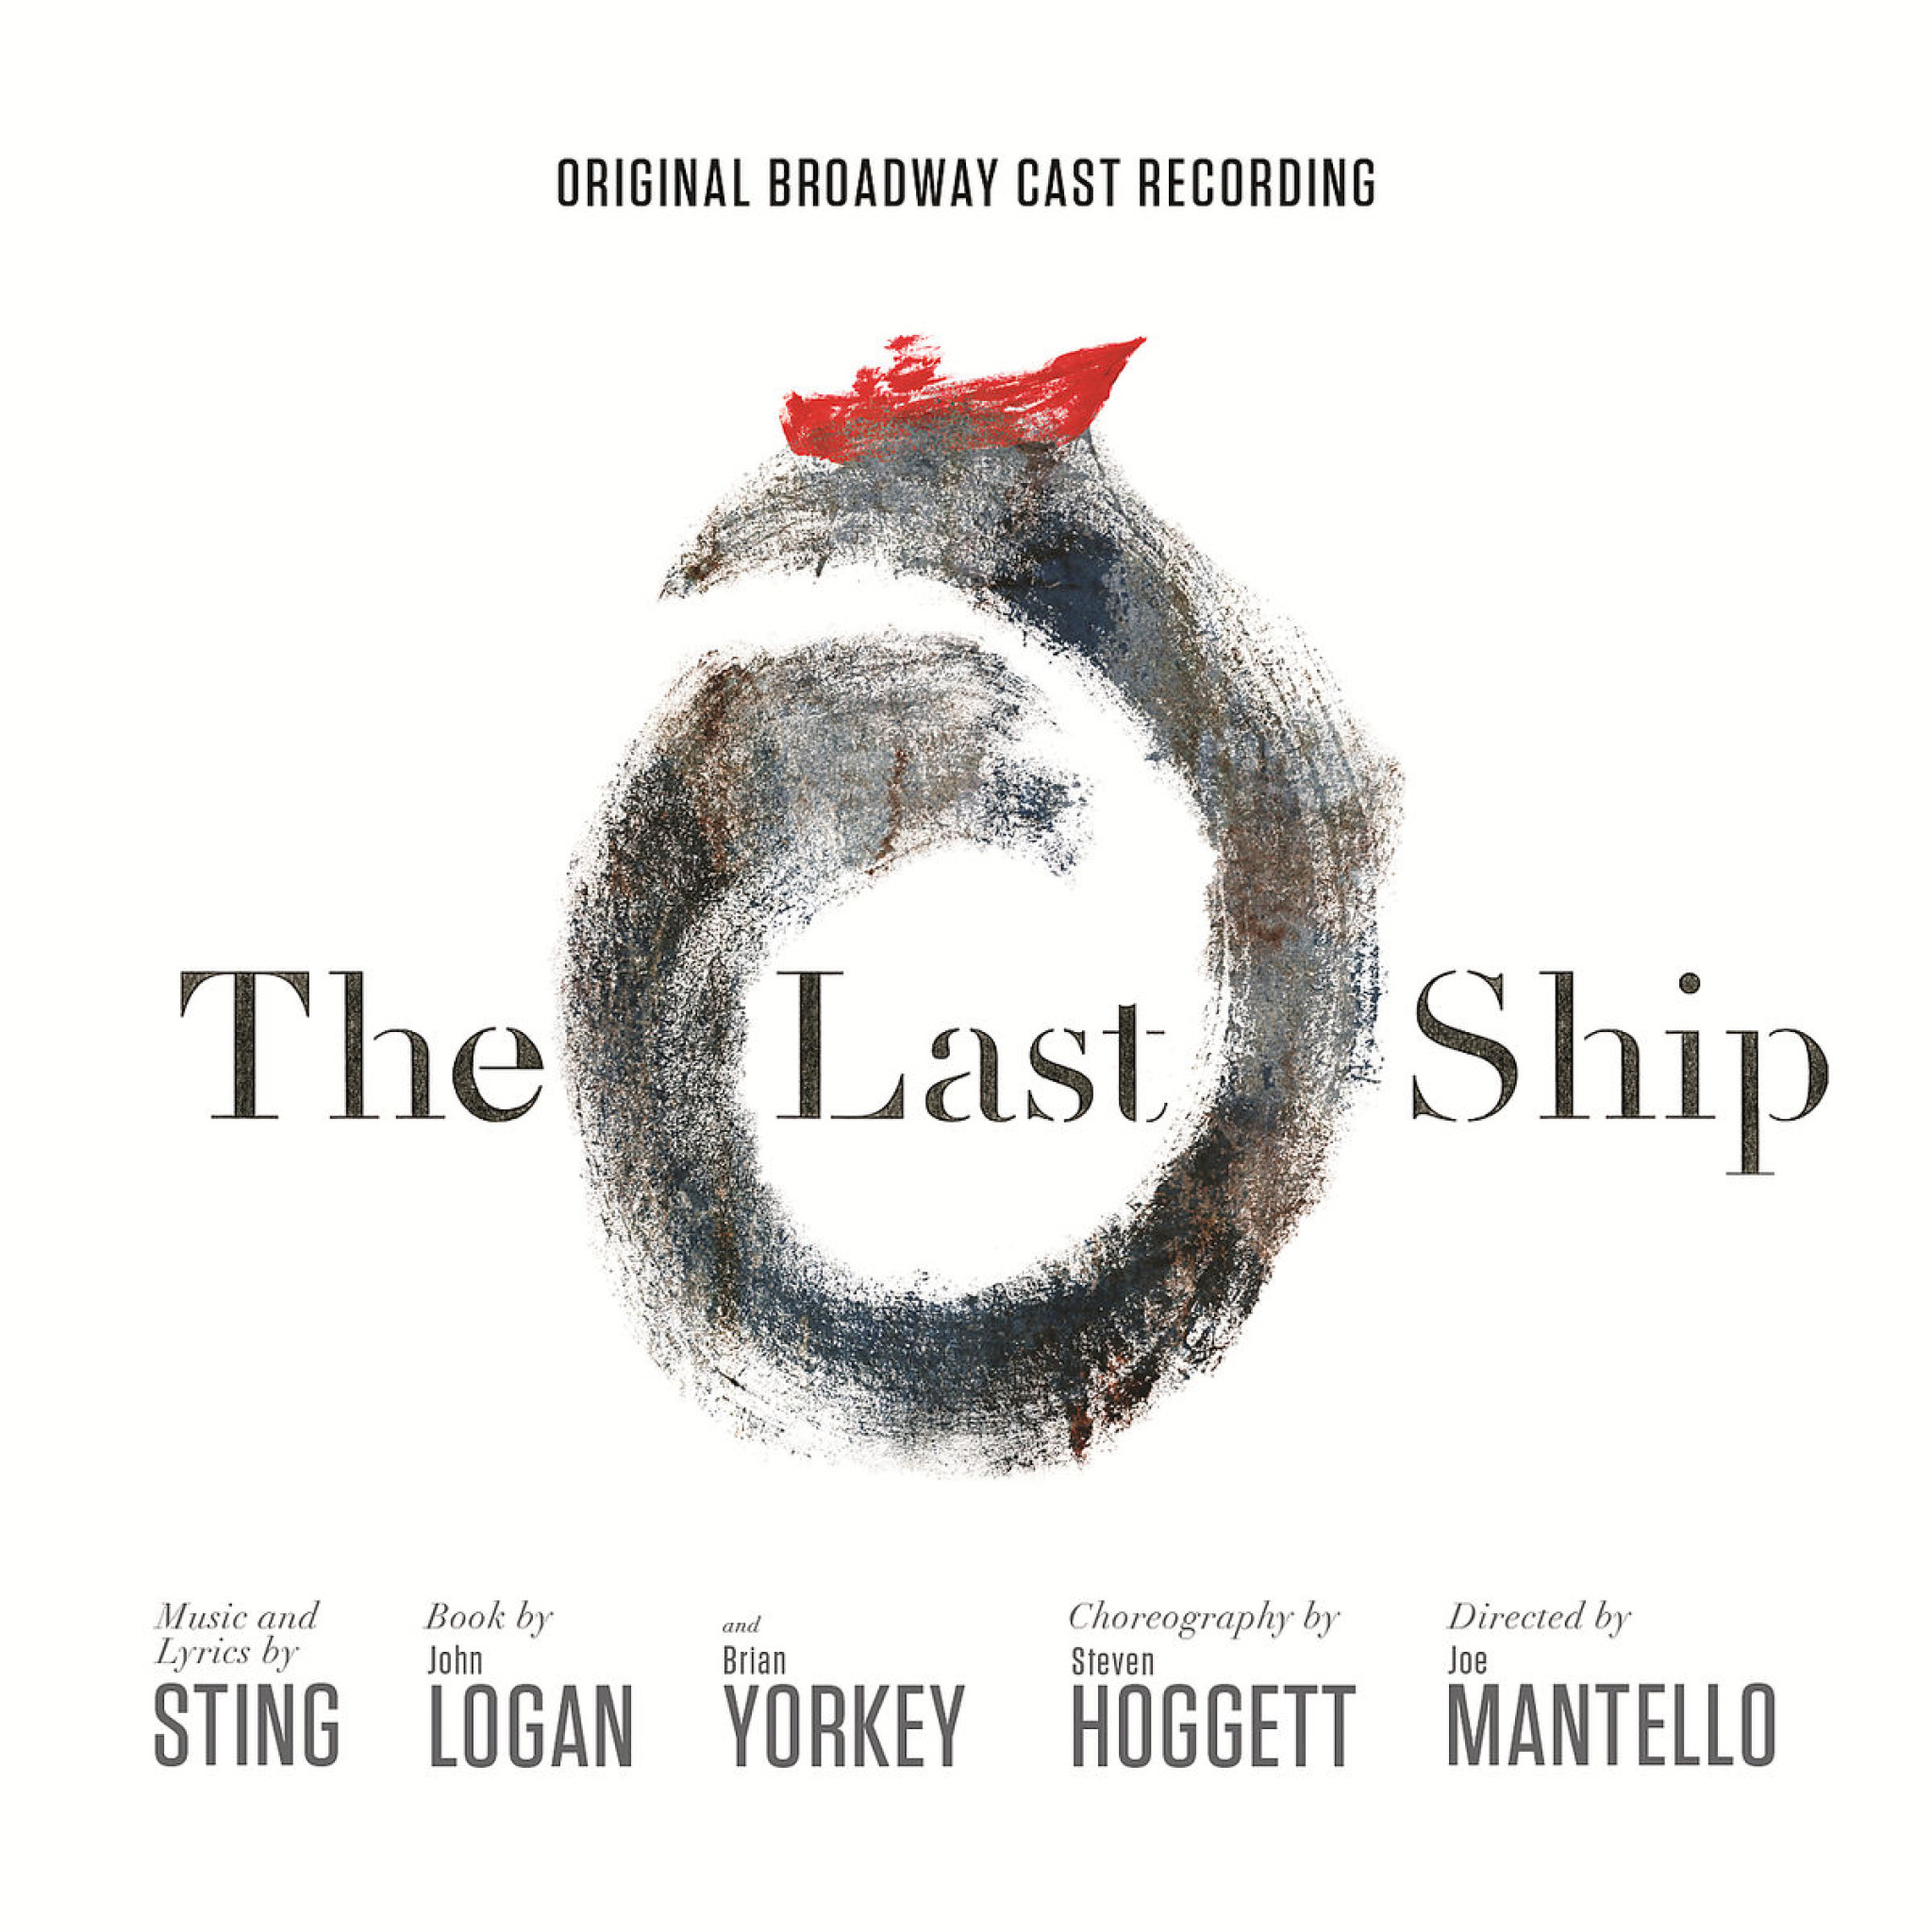 THE LAST SHIP